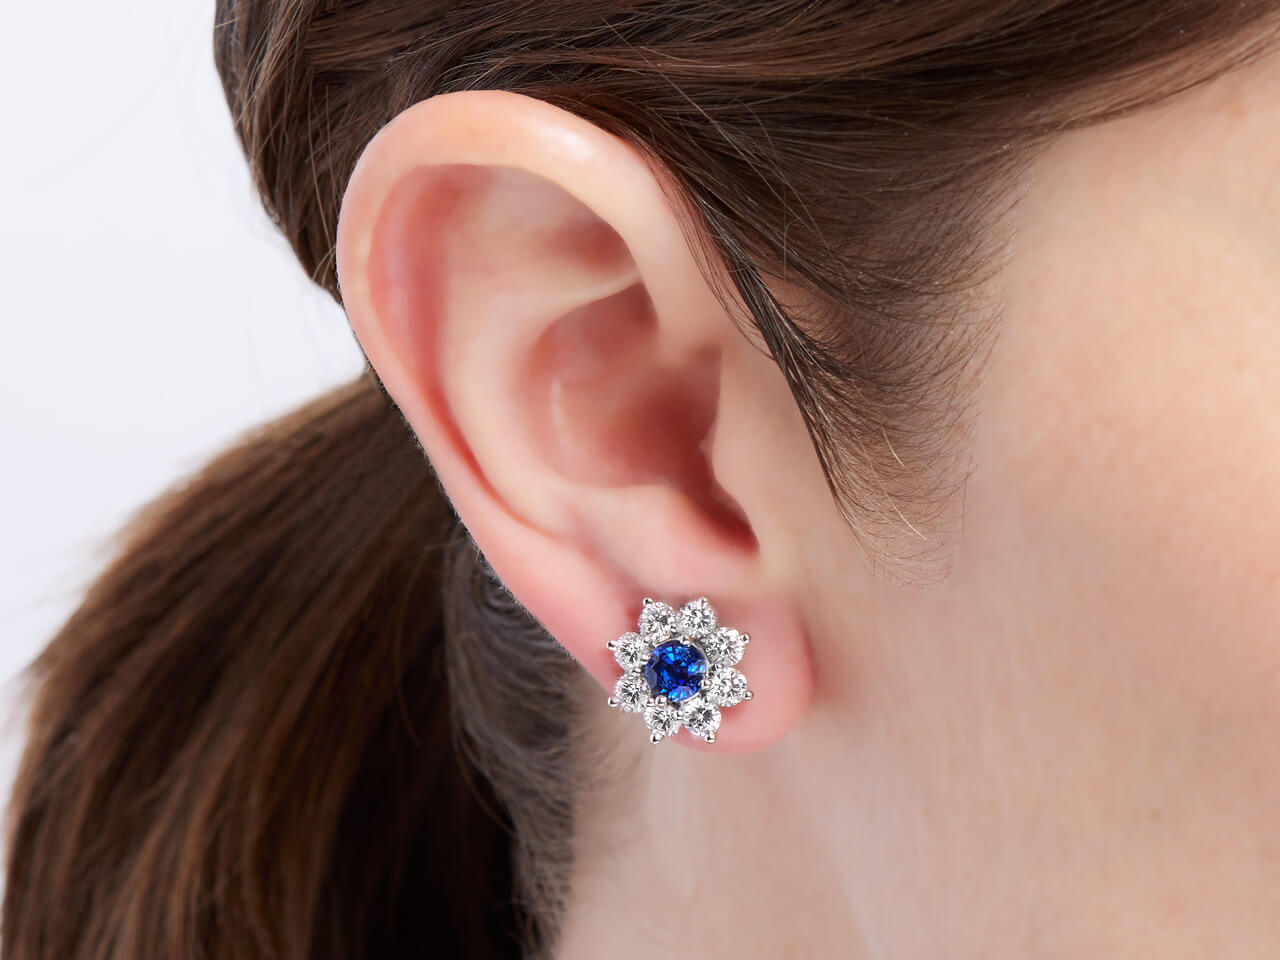 Beladora 'Bespoke' Sapphire and Diamond Earrings in Platinum